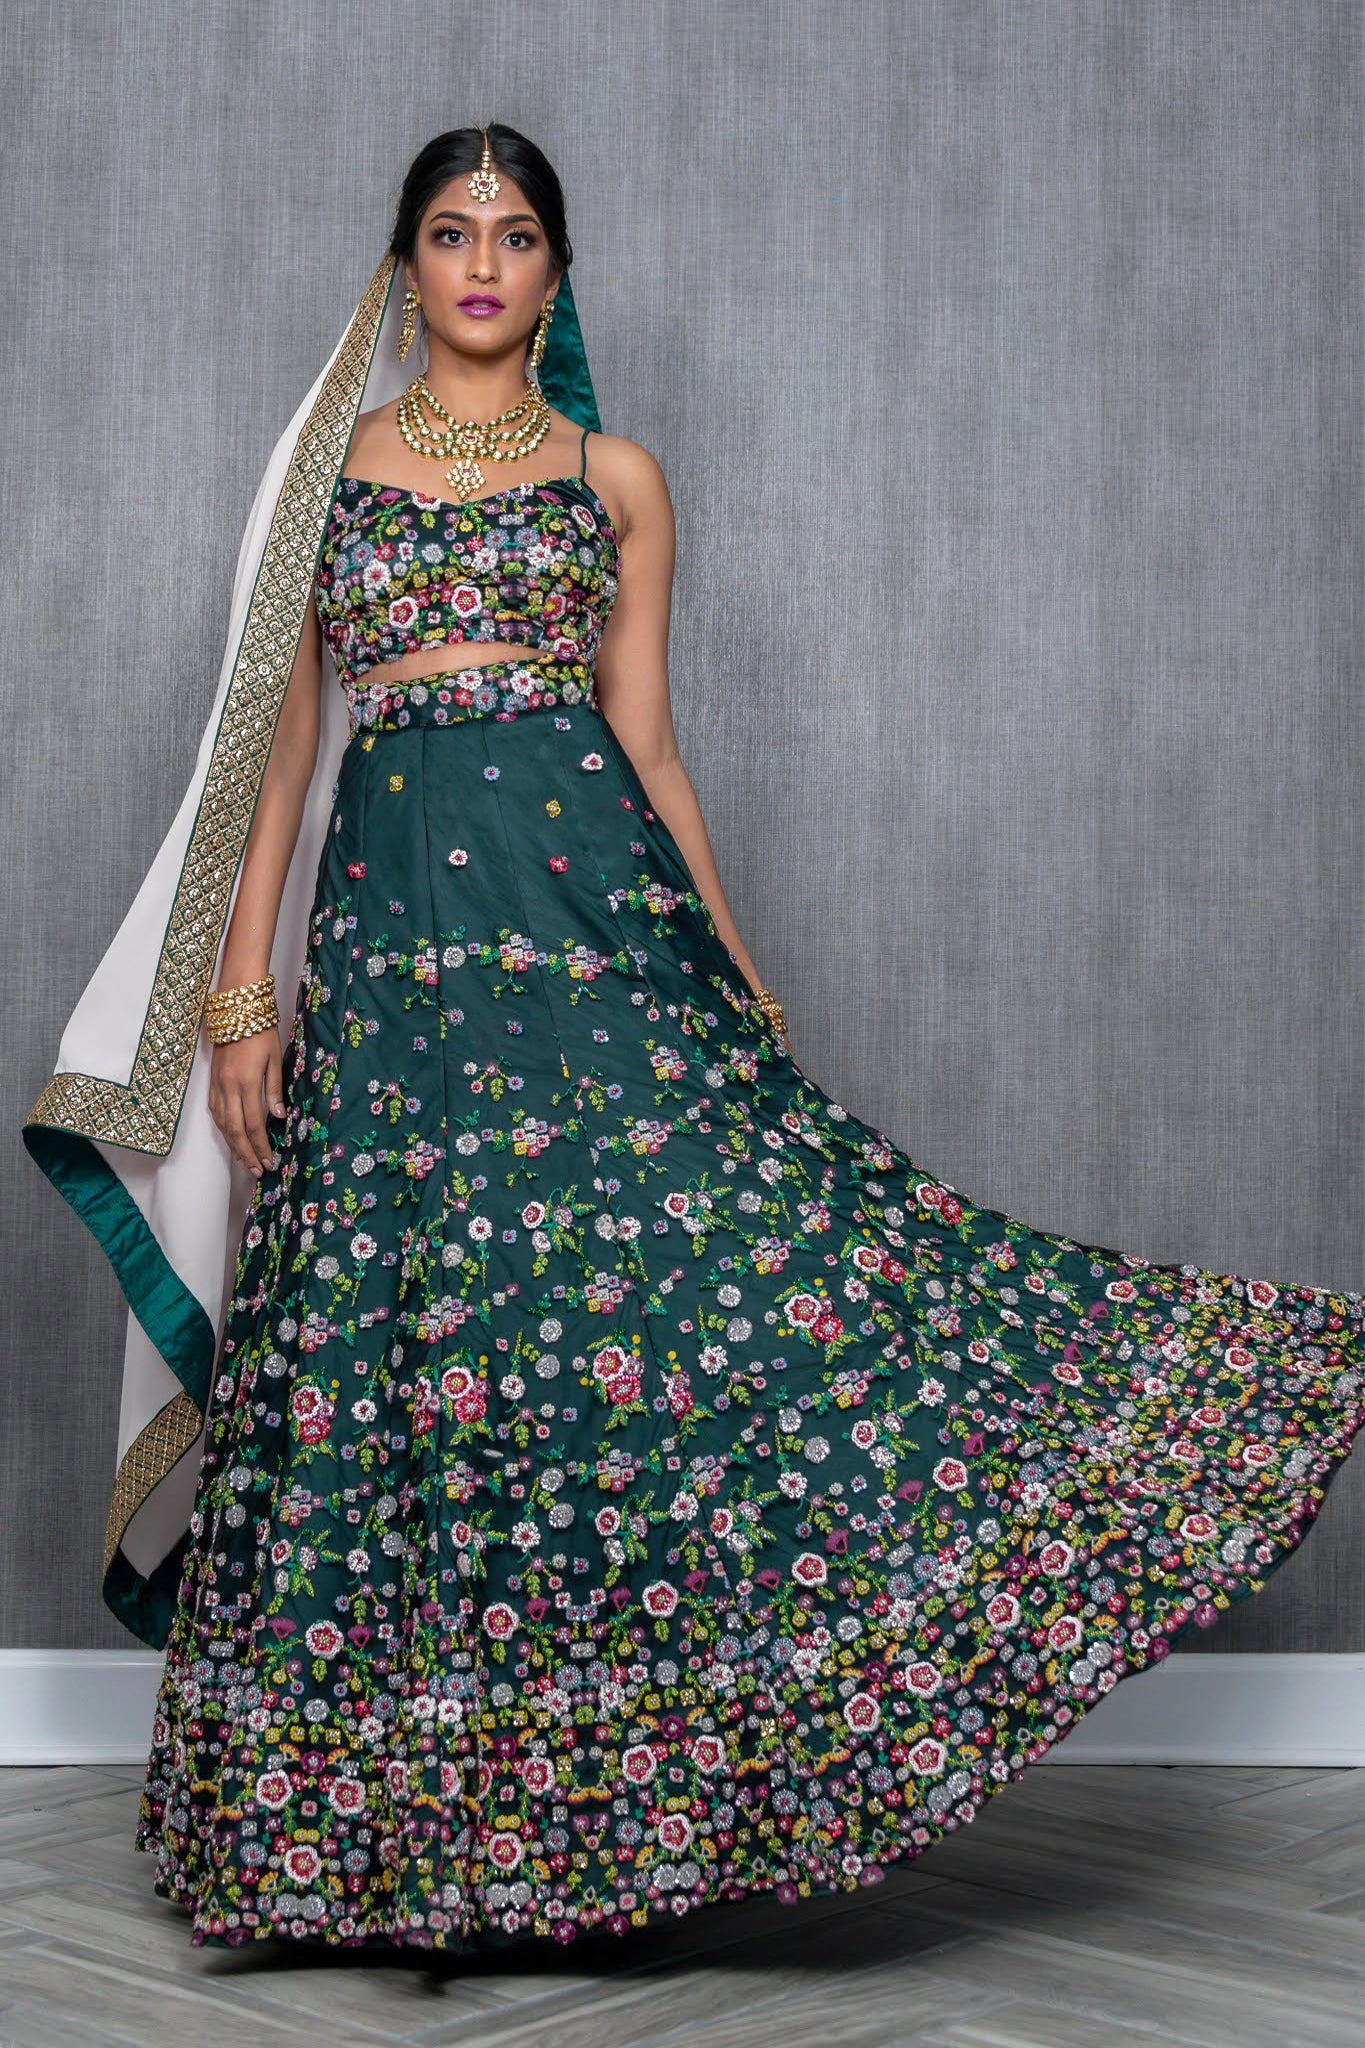 Panna Floral Embroidered Indian Bridal Lehenga - Forest Green - Harleen Kaur